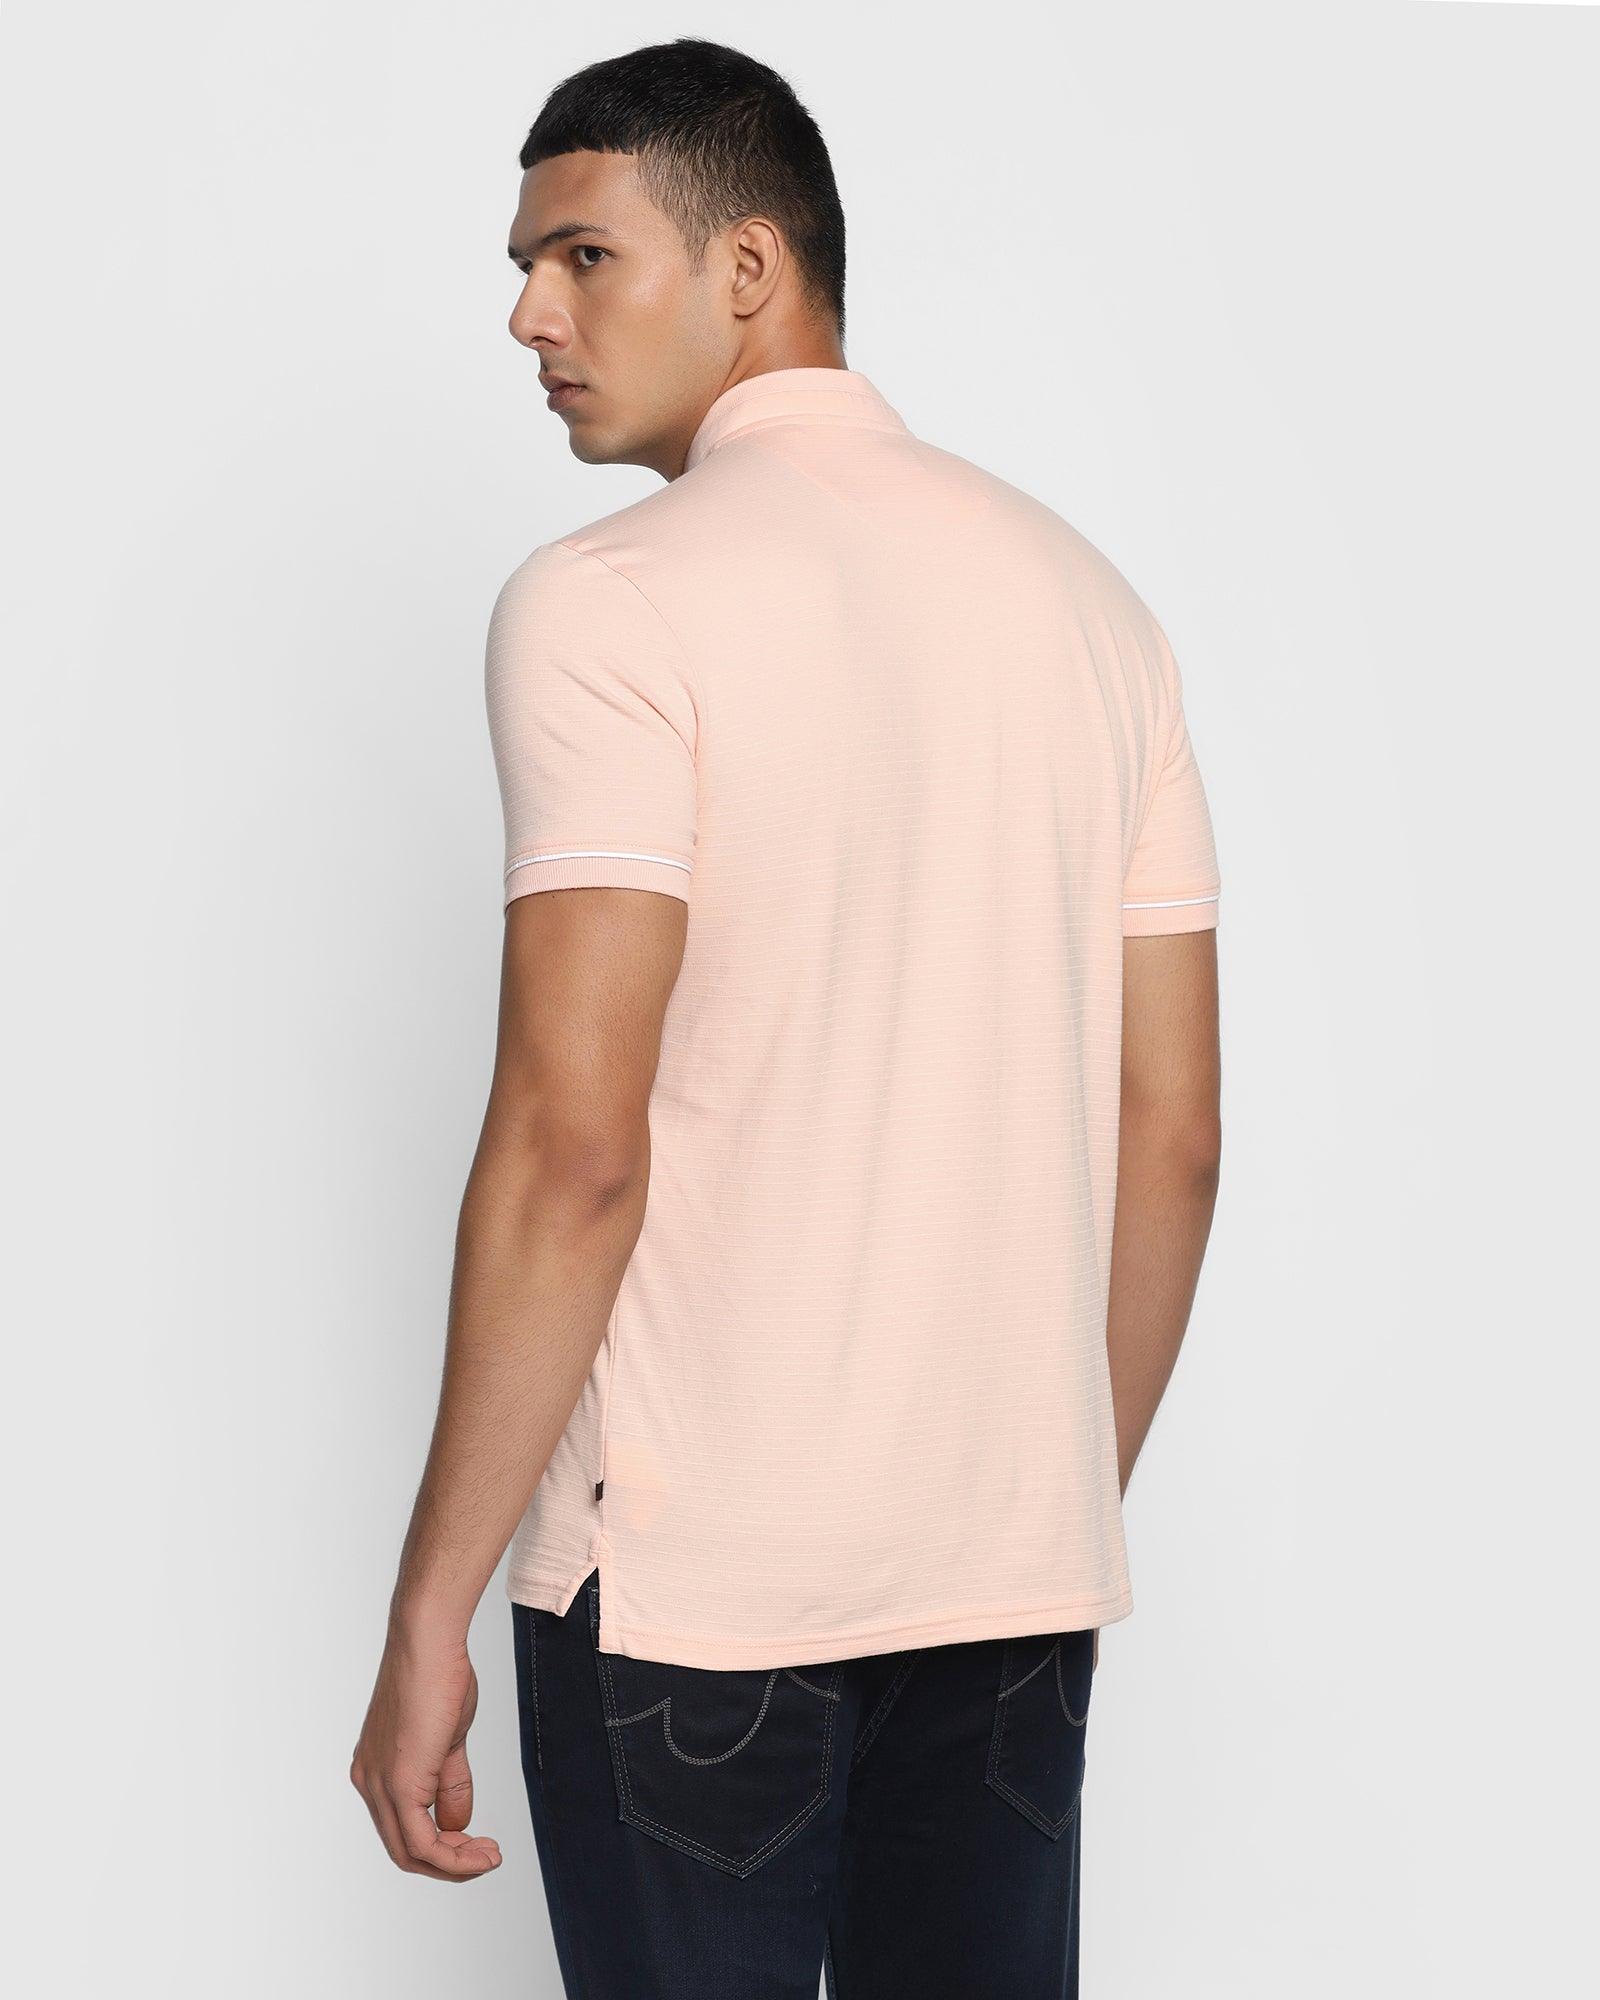 Stylized Collar Peach Textured T Shirt - Kore